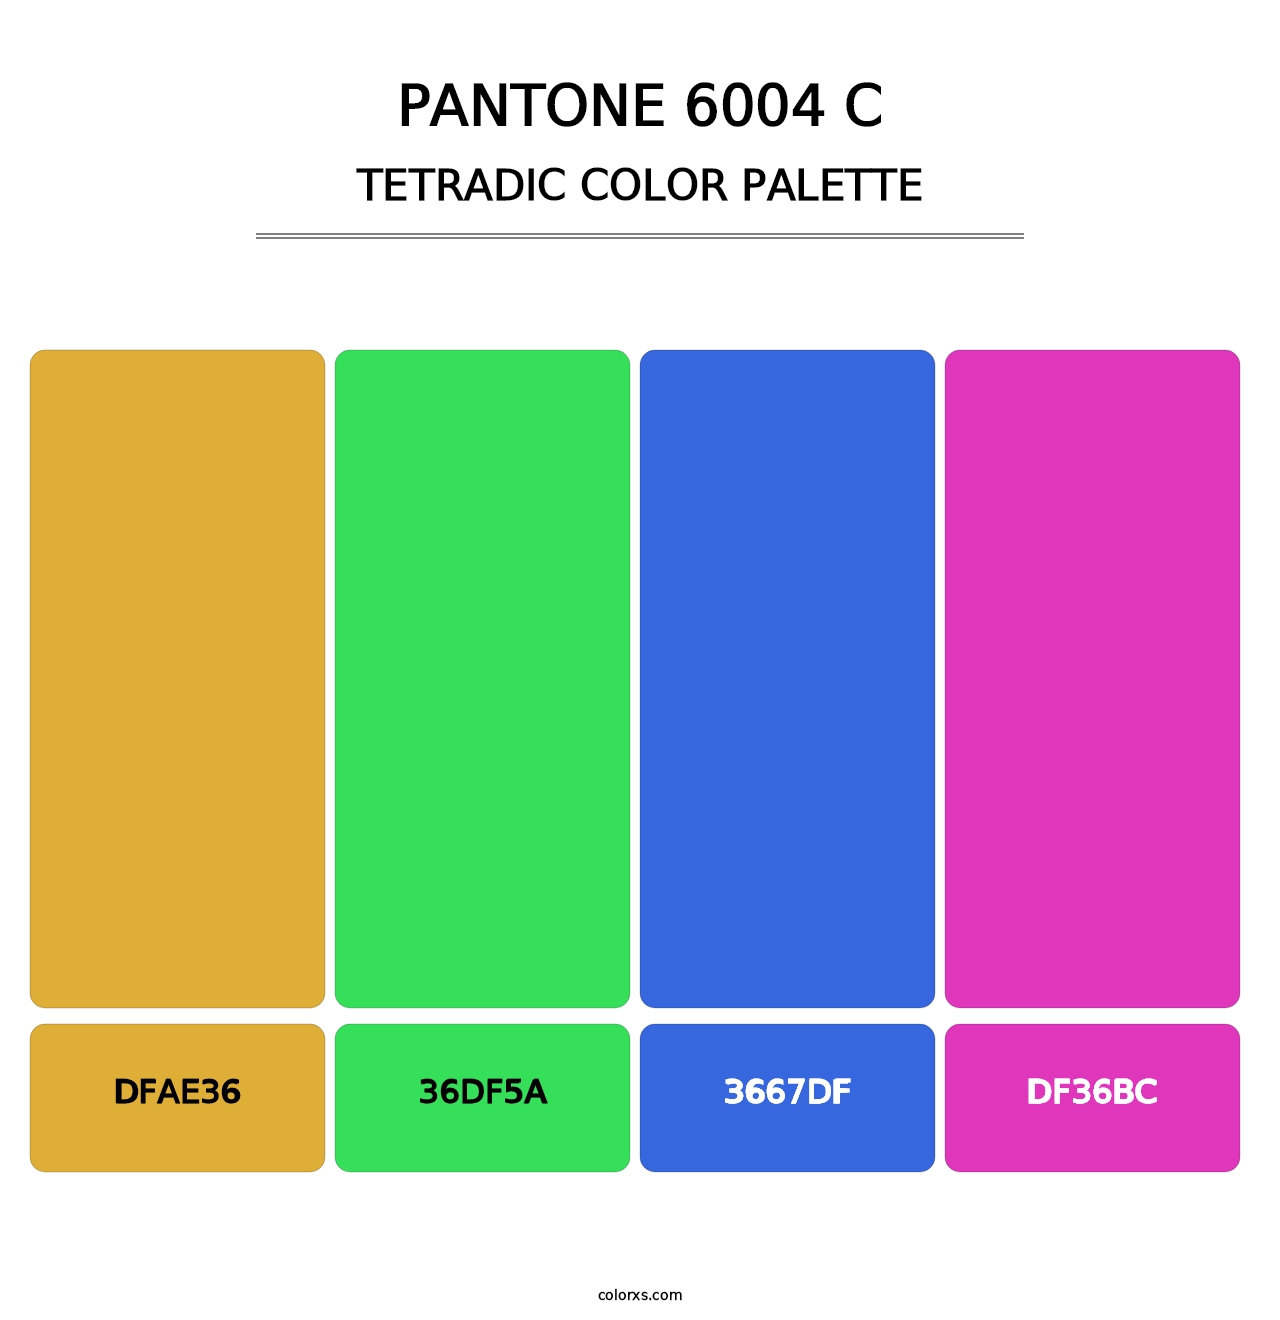 PANTONE 6004 C - Tetradic Color Palette